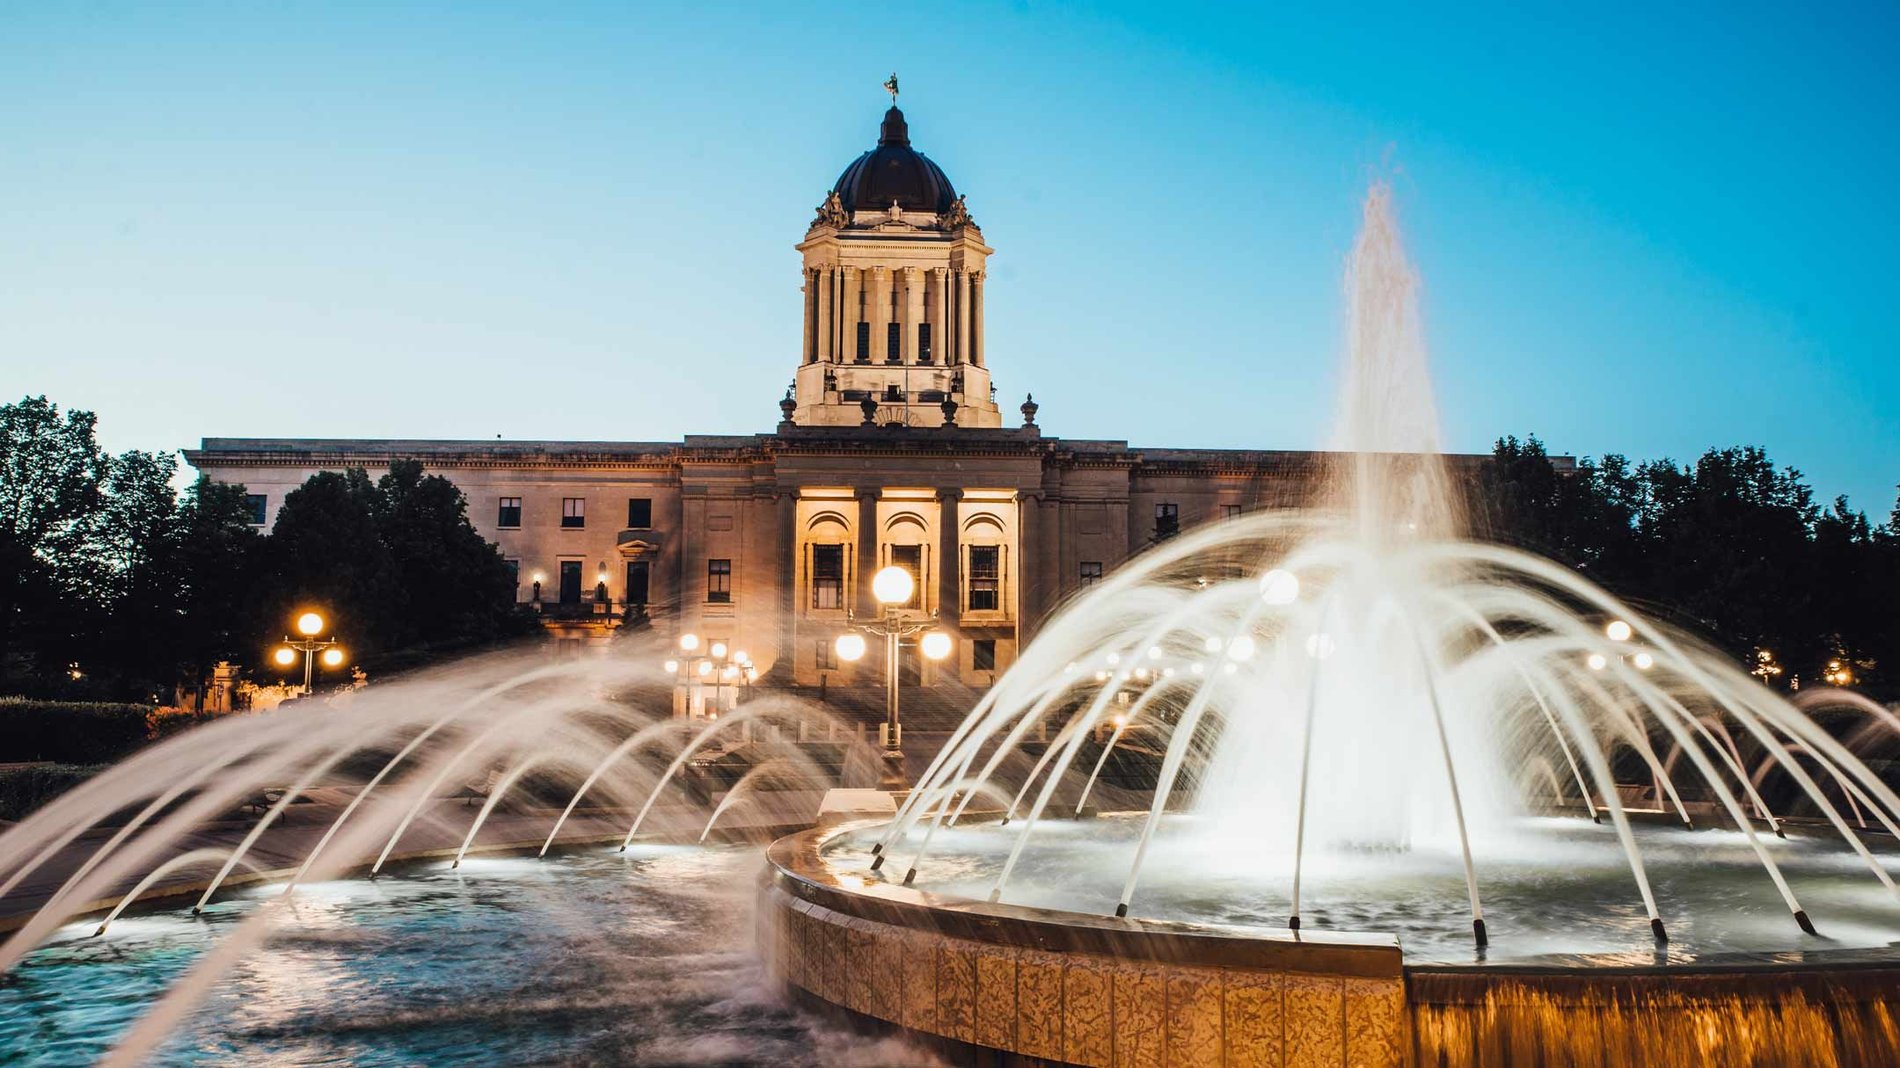 A fountain in front of the Manitoba Legislative Building in Winnipeg